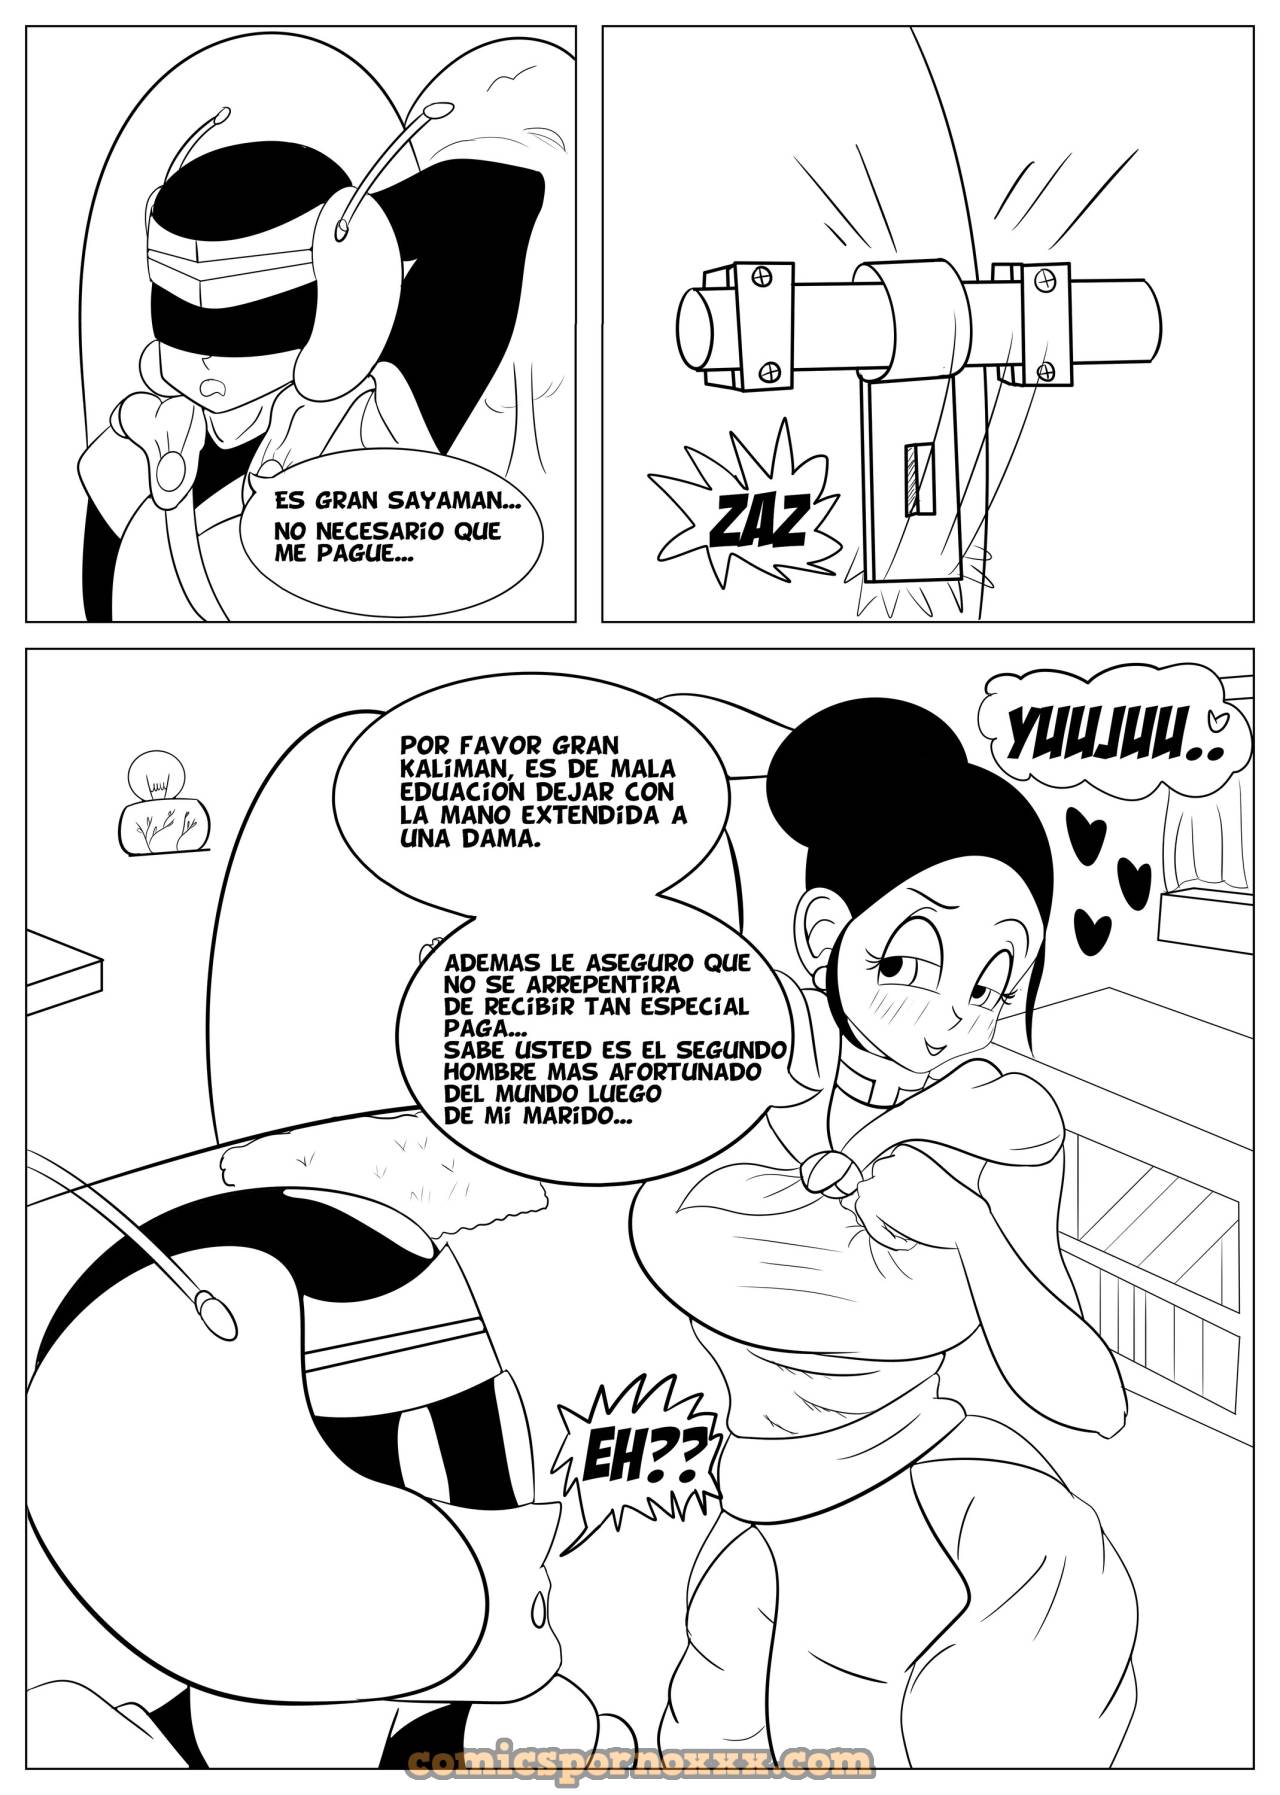 Malentendidos Familiares - 5 - Comics Porno - Hentai Manga - Cartoon XXX